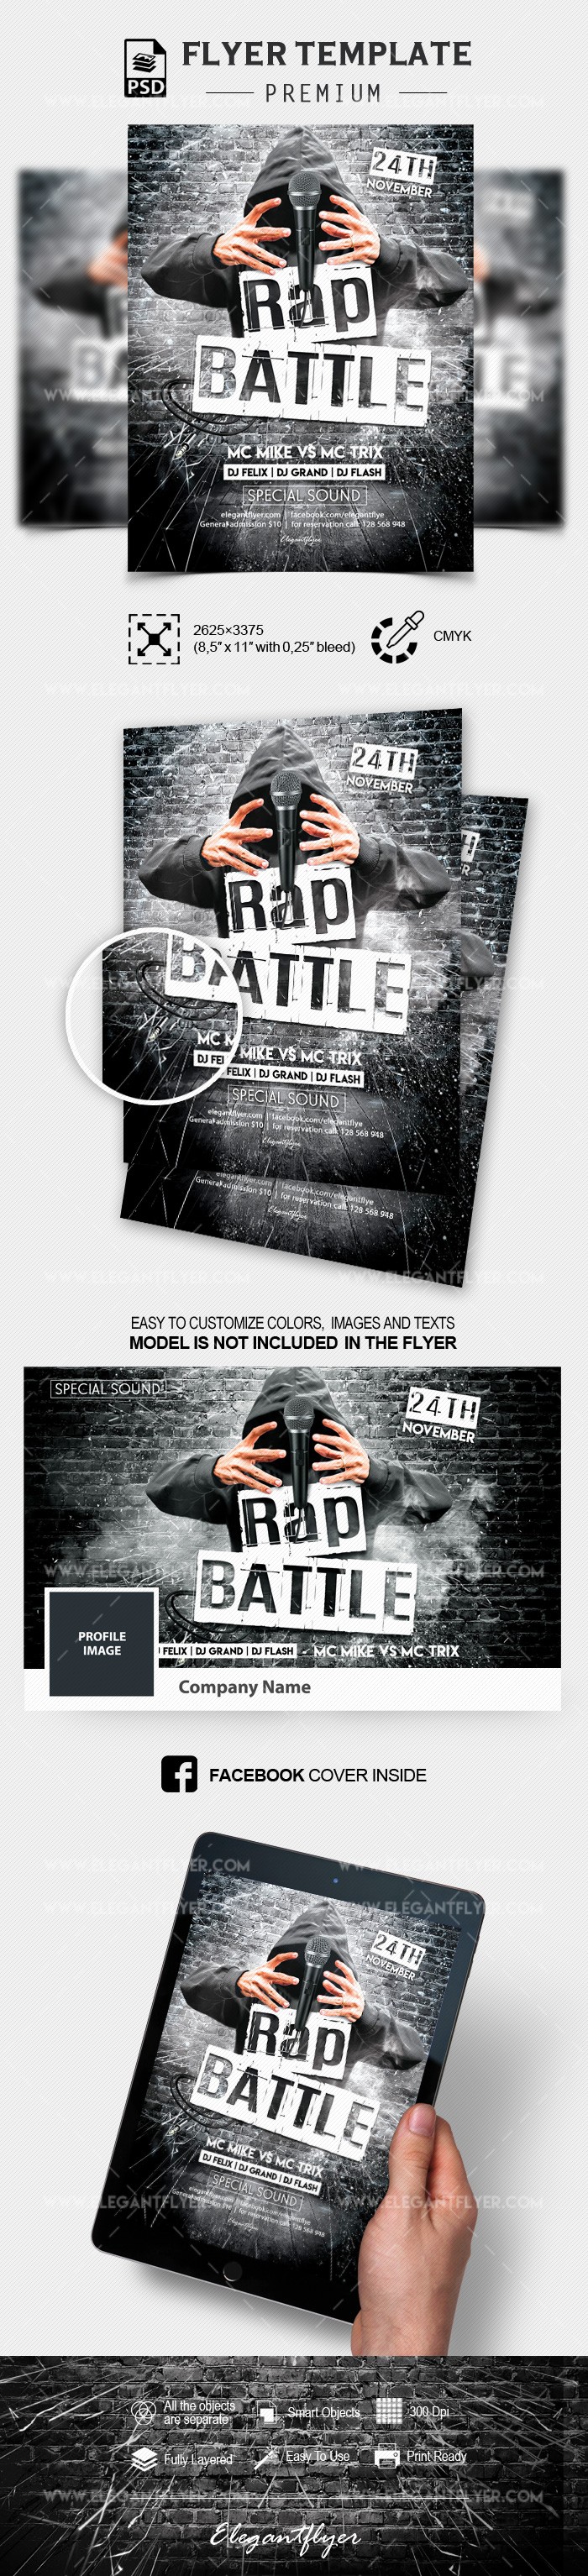 RAP Battle - Bitwa rapów by ElegantFlyer